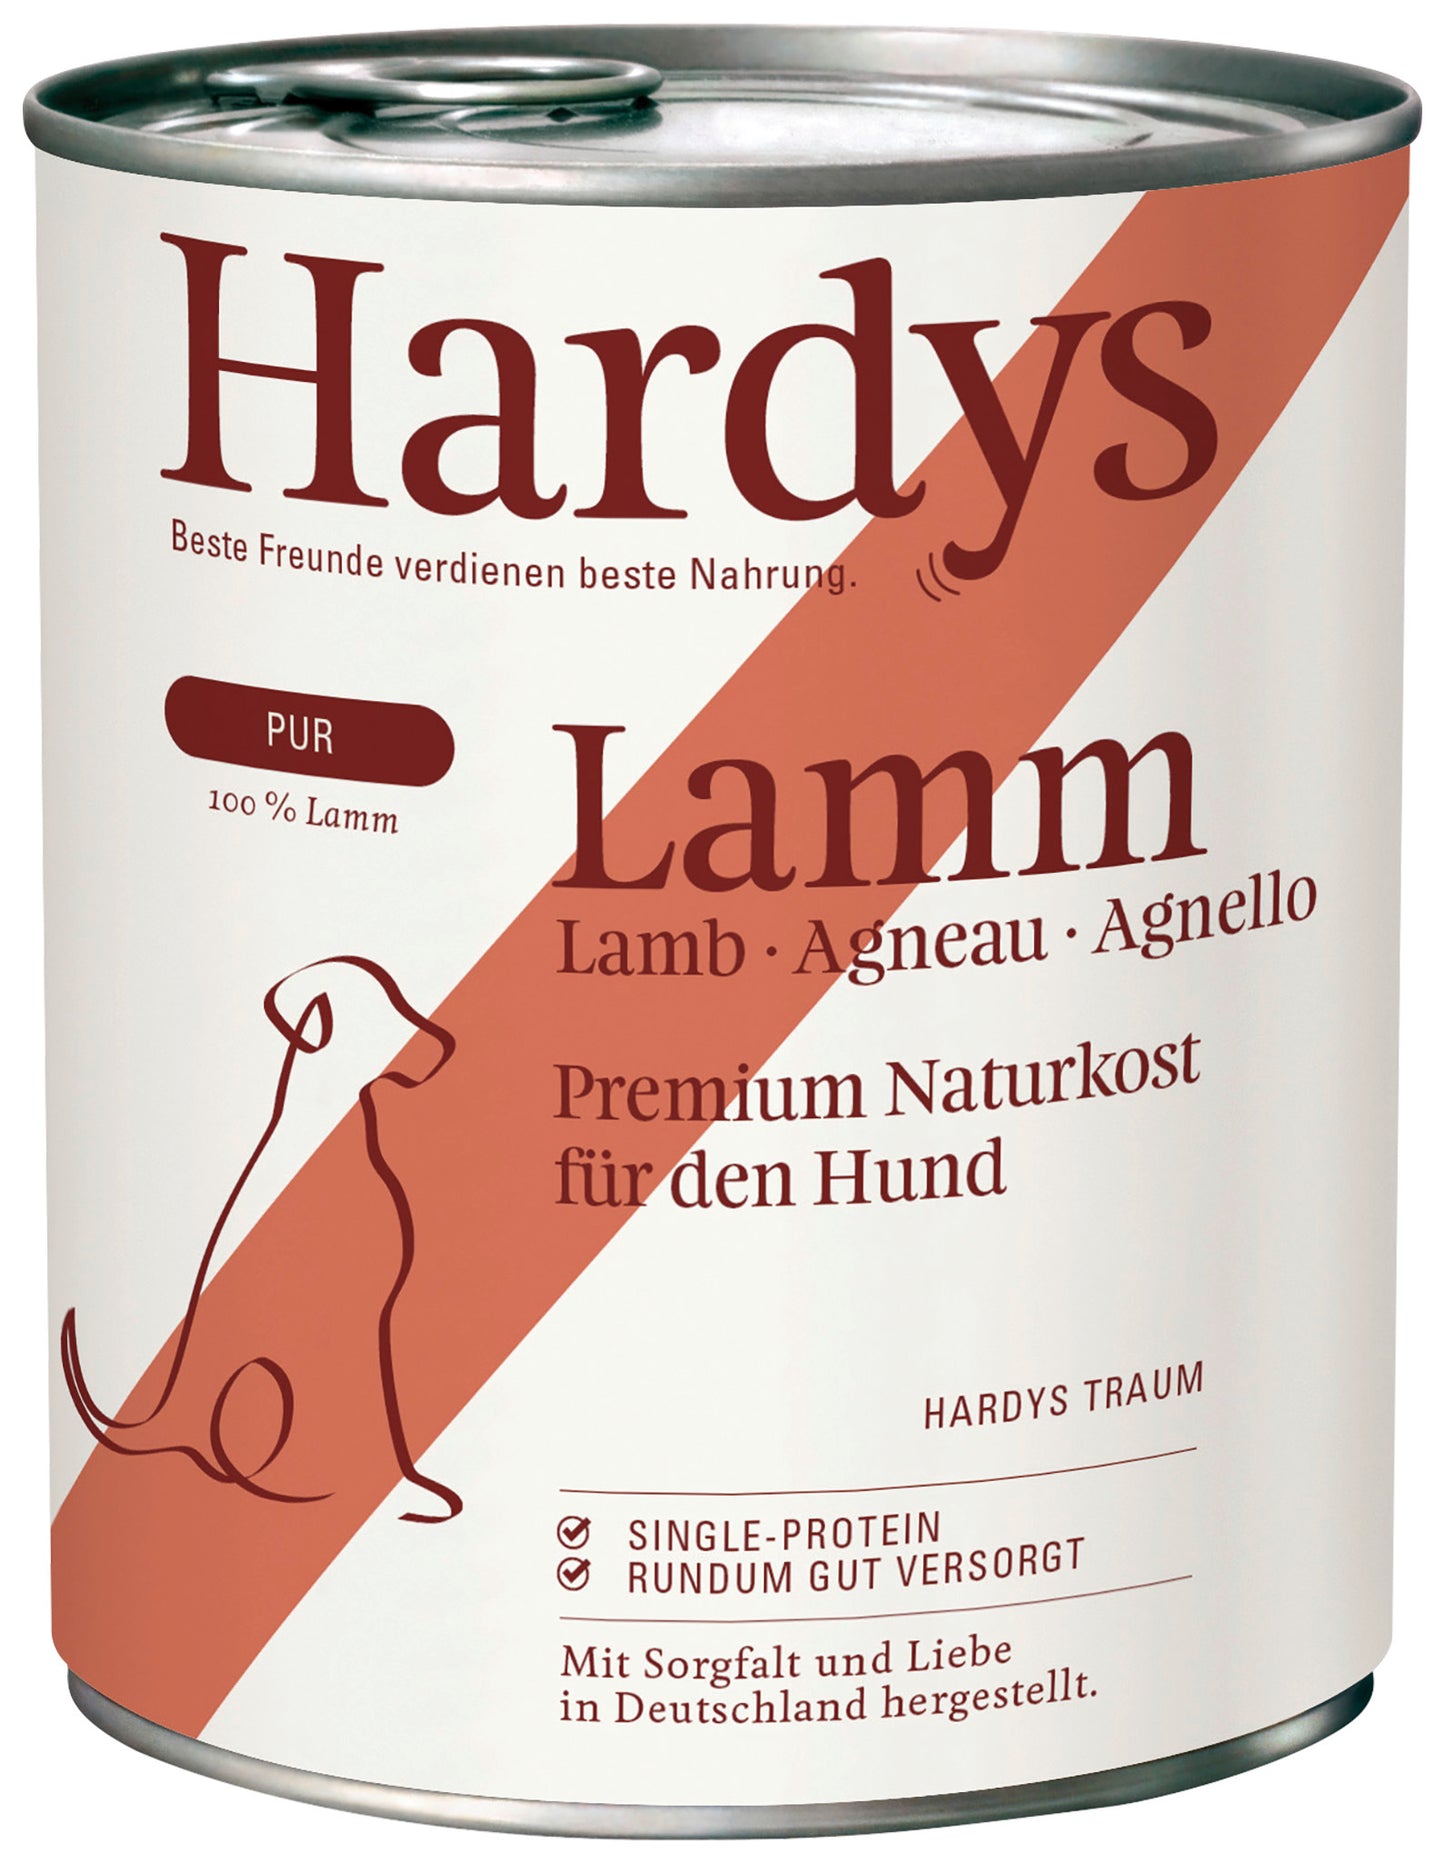 Hardys Lamm - Pur 800g